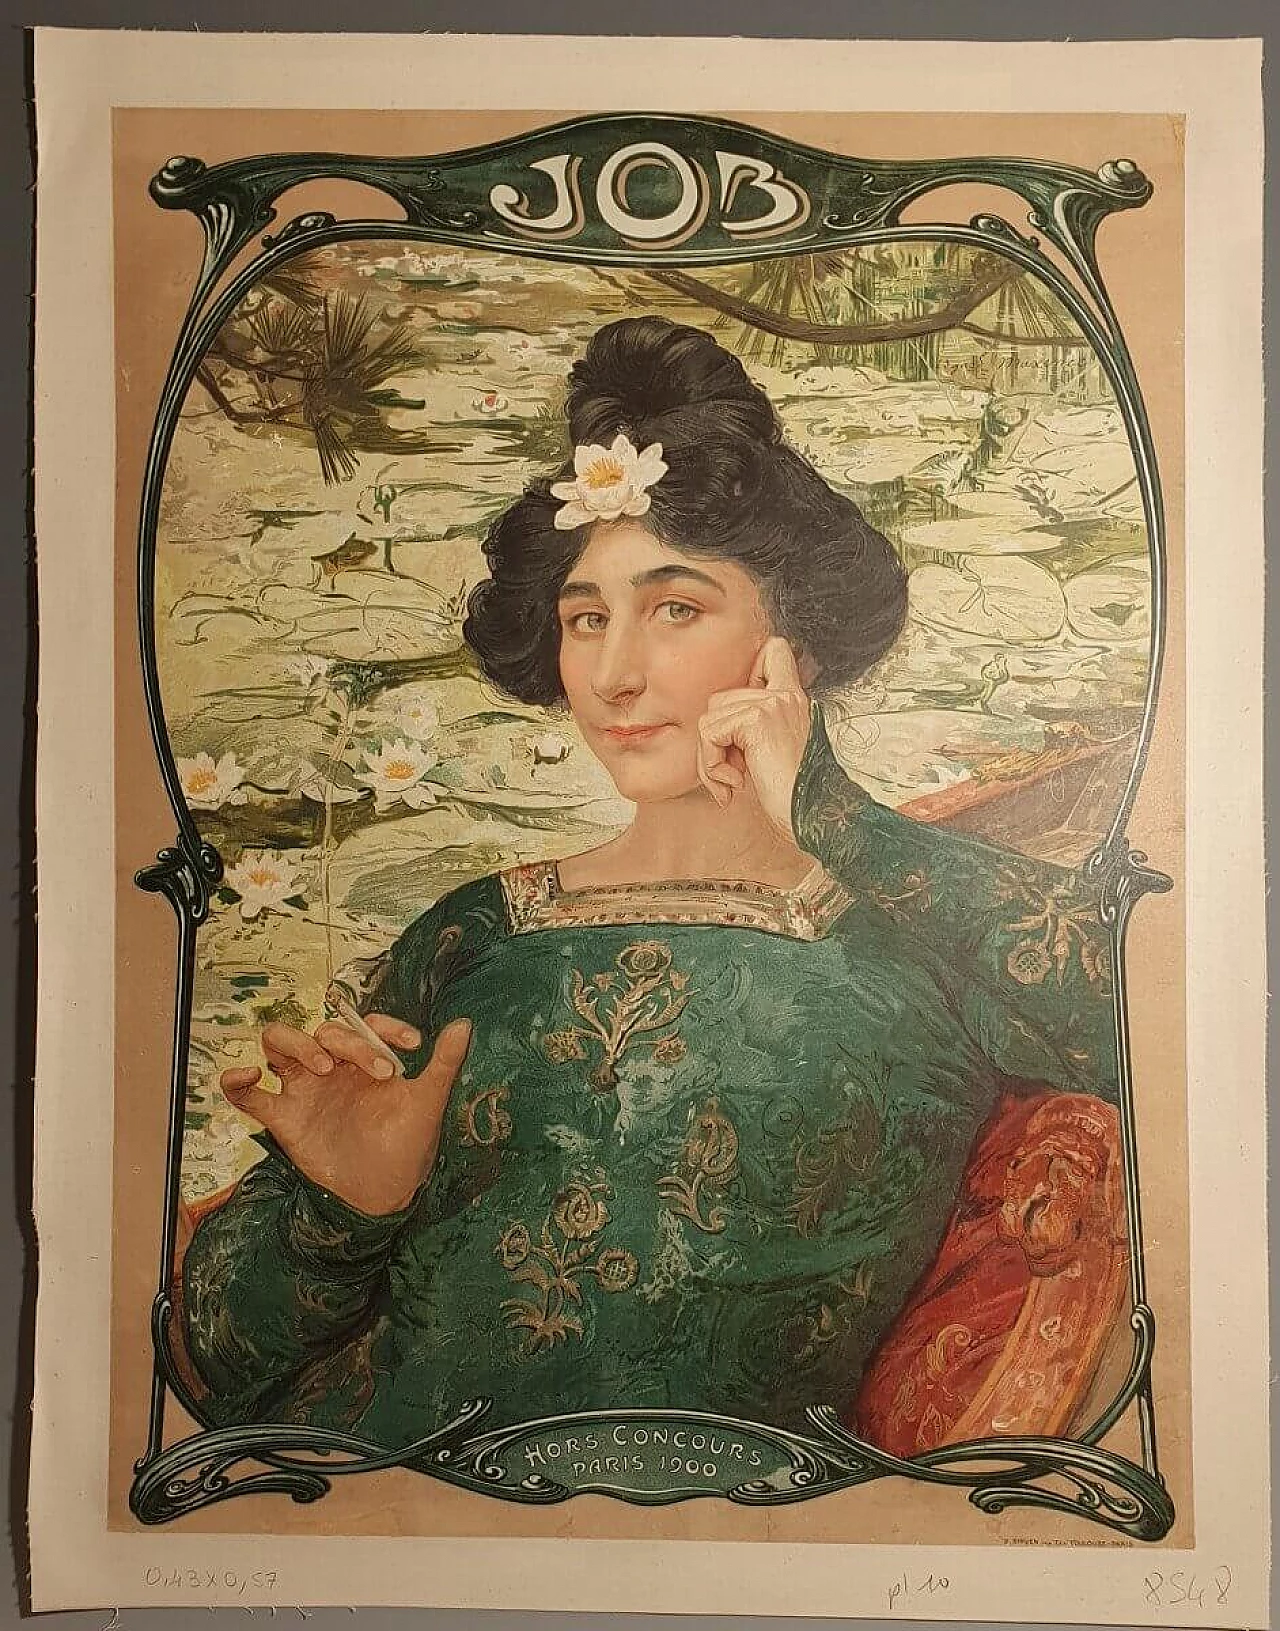 Laminated advertising poster for Job cigarette brand, 1900 6